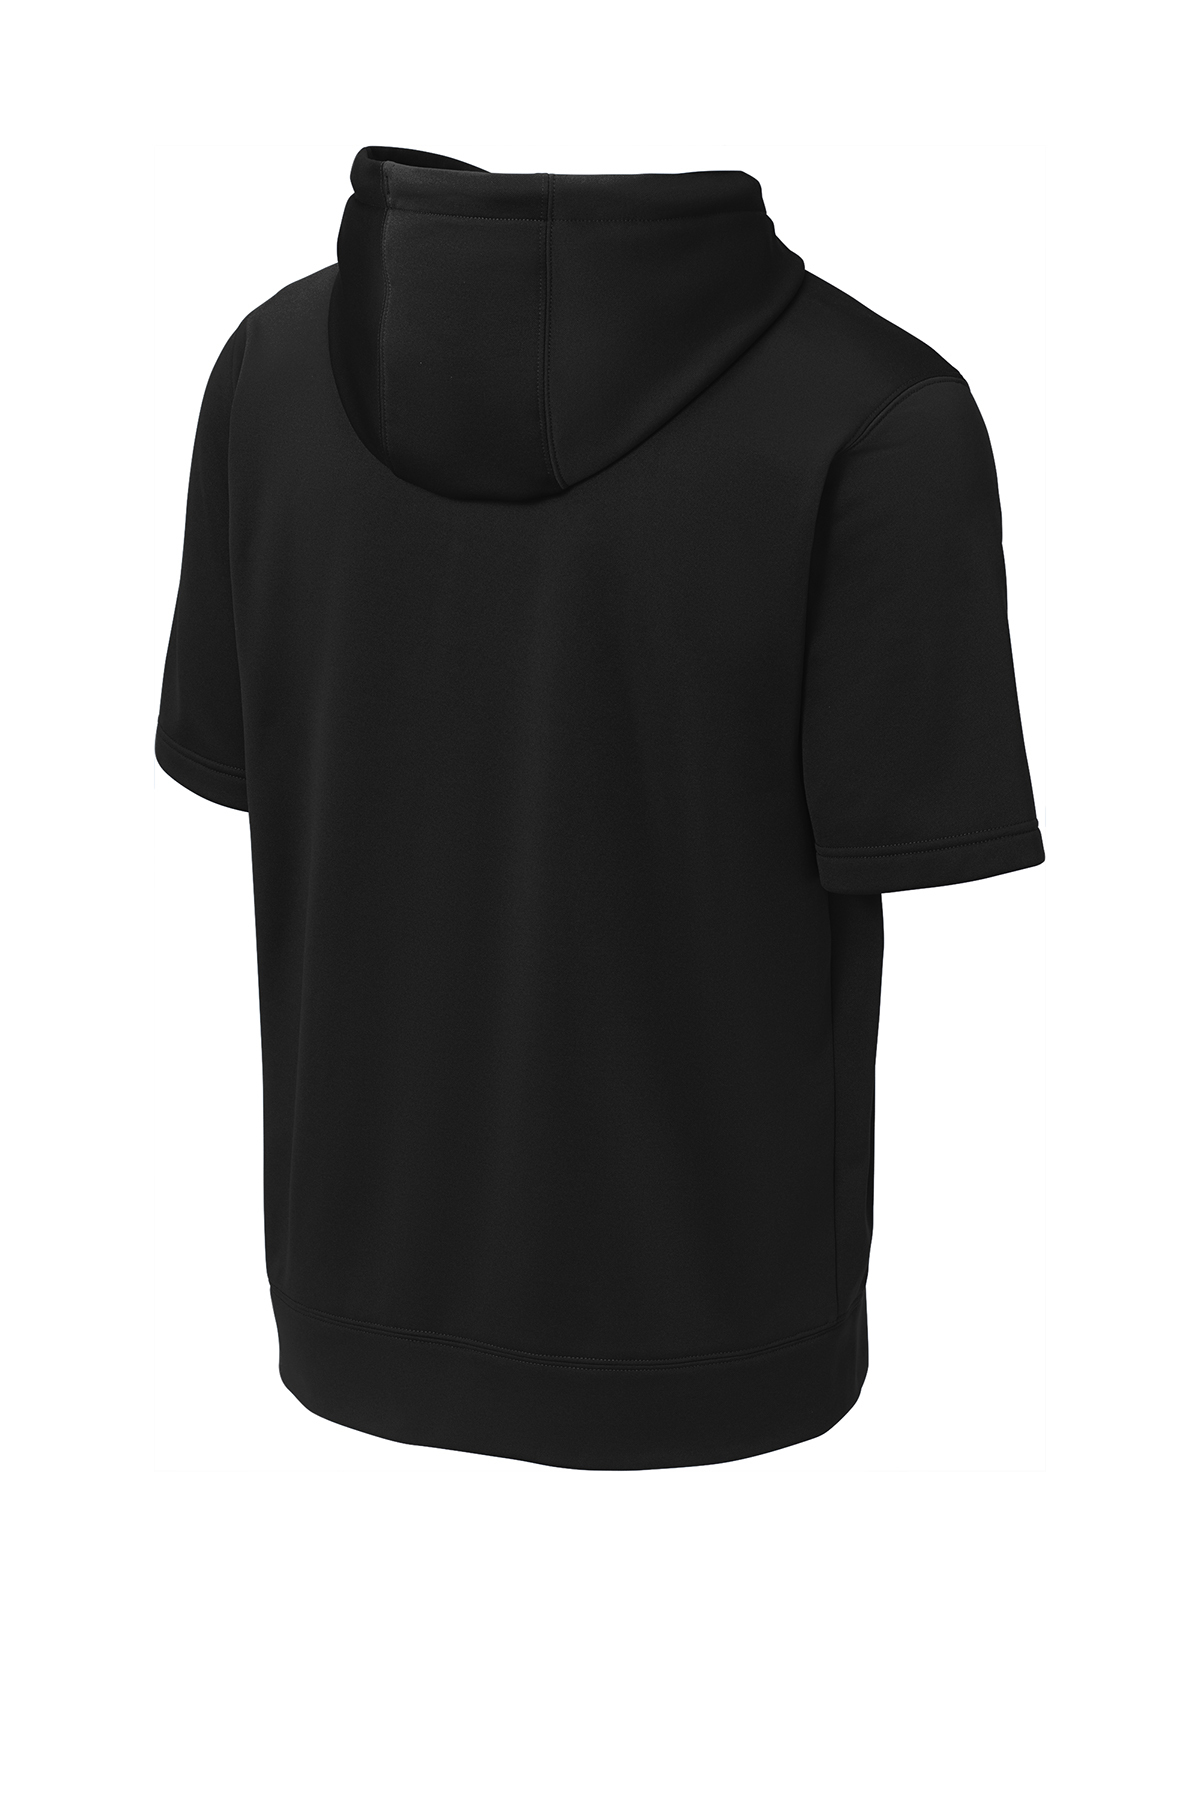 Sport-Tek Sport-Wick Fleece Short Sleeve Hooded Pullover | Product ...